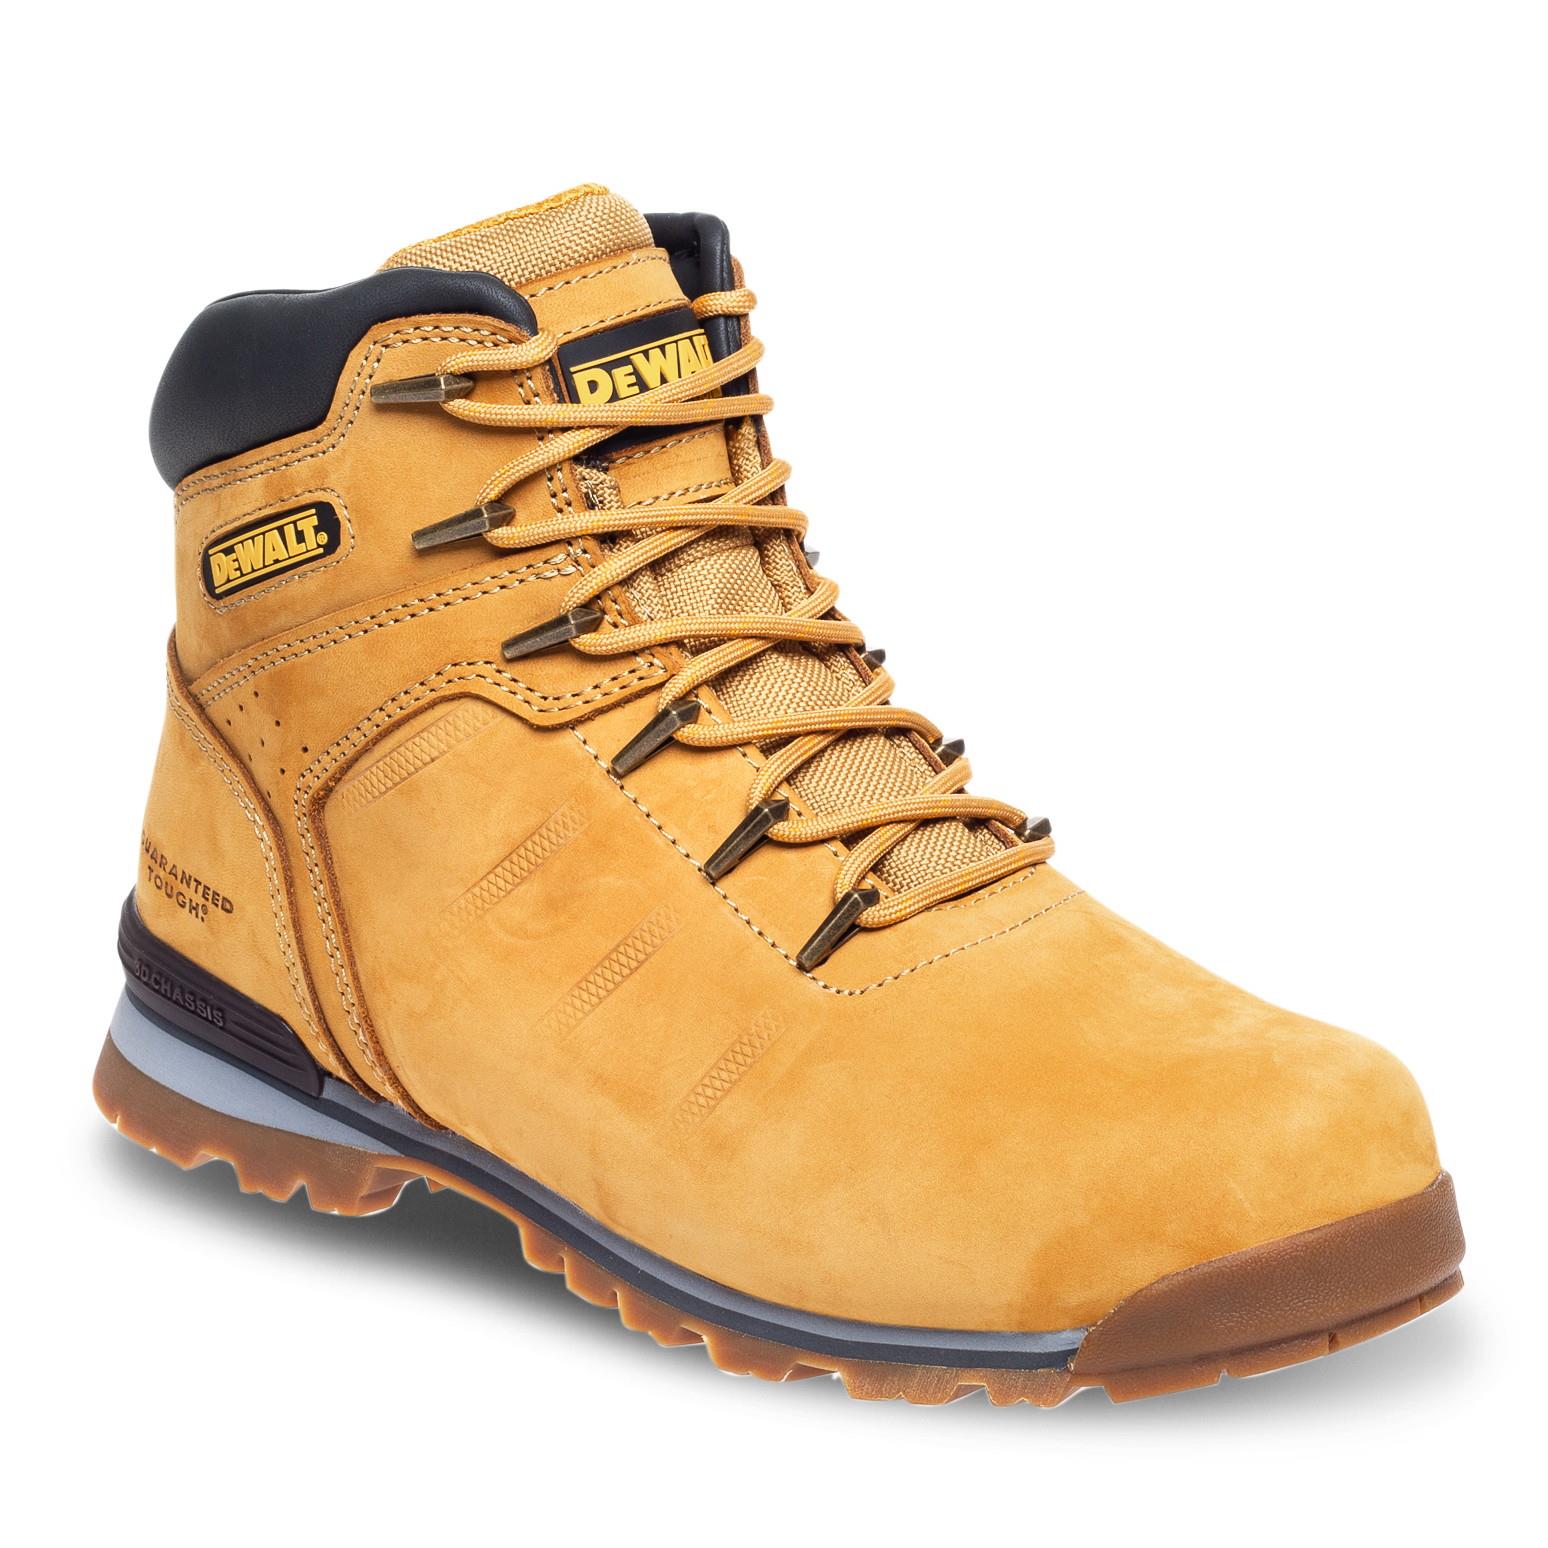 DeWalt Carlisle Wheat Nubuck Safety Boots; SB And SRA Rated; Wheat (WT); Size 9 (43)